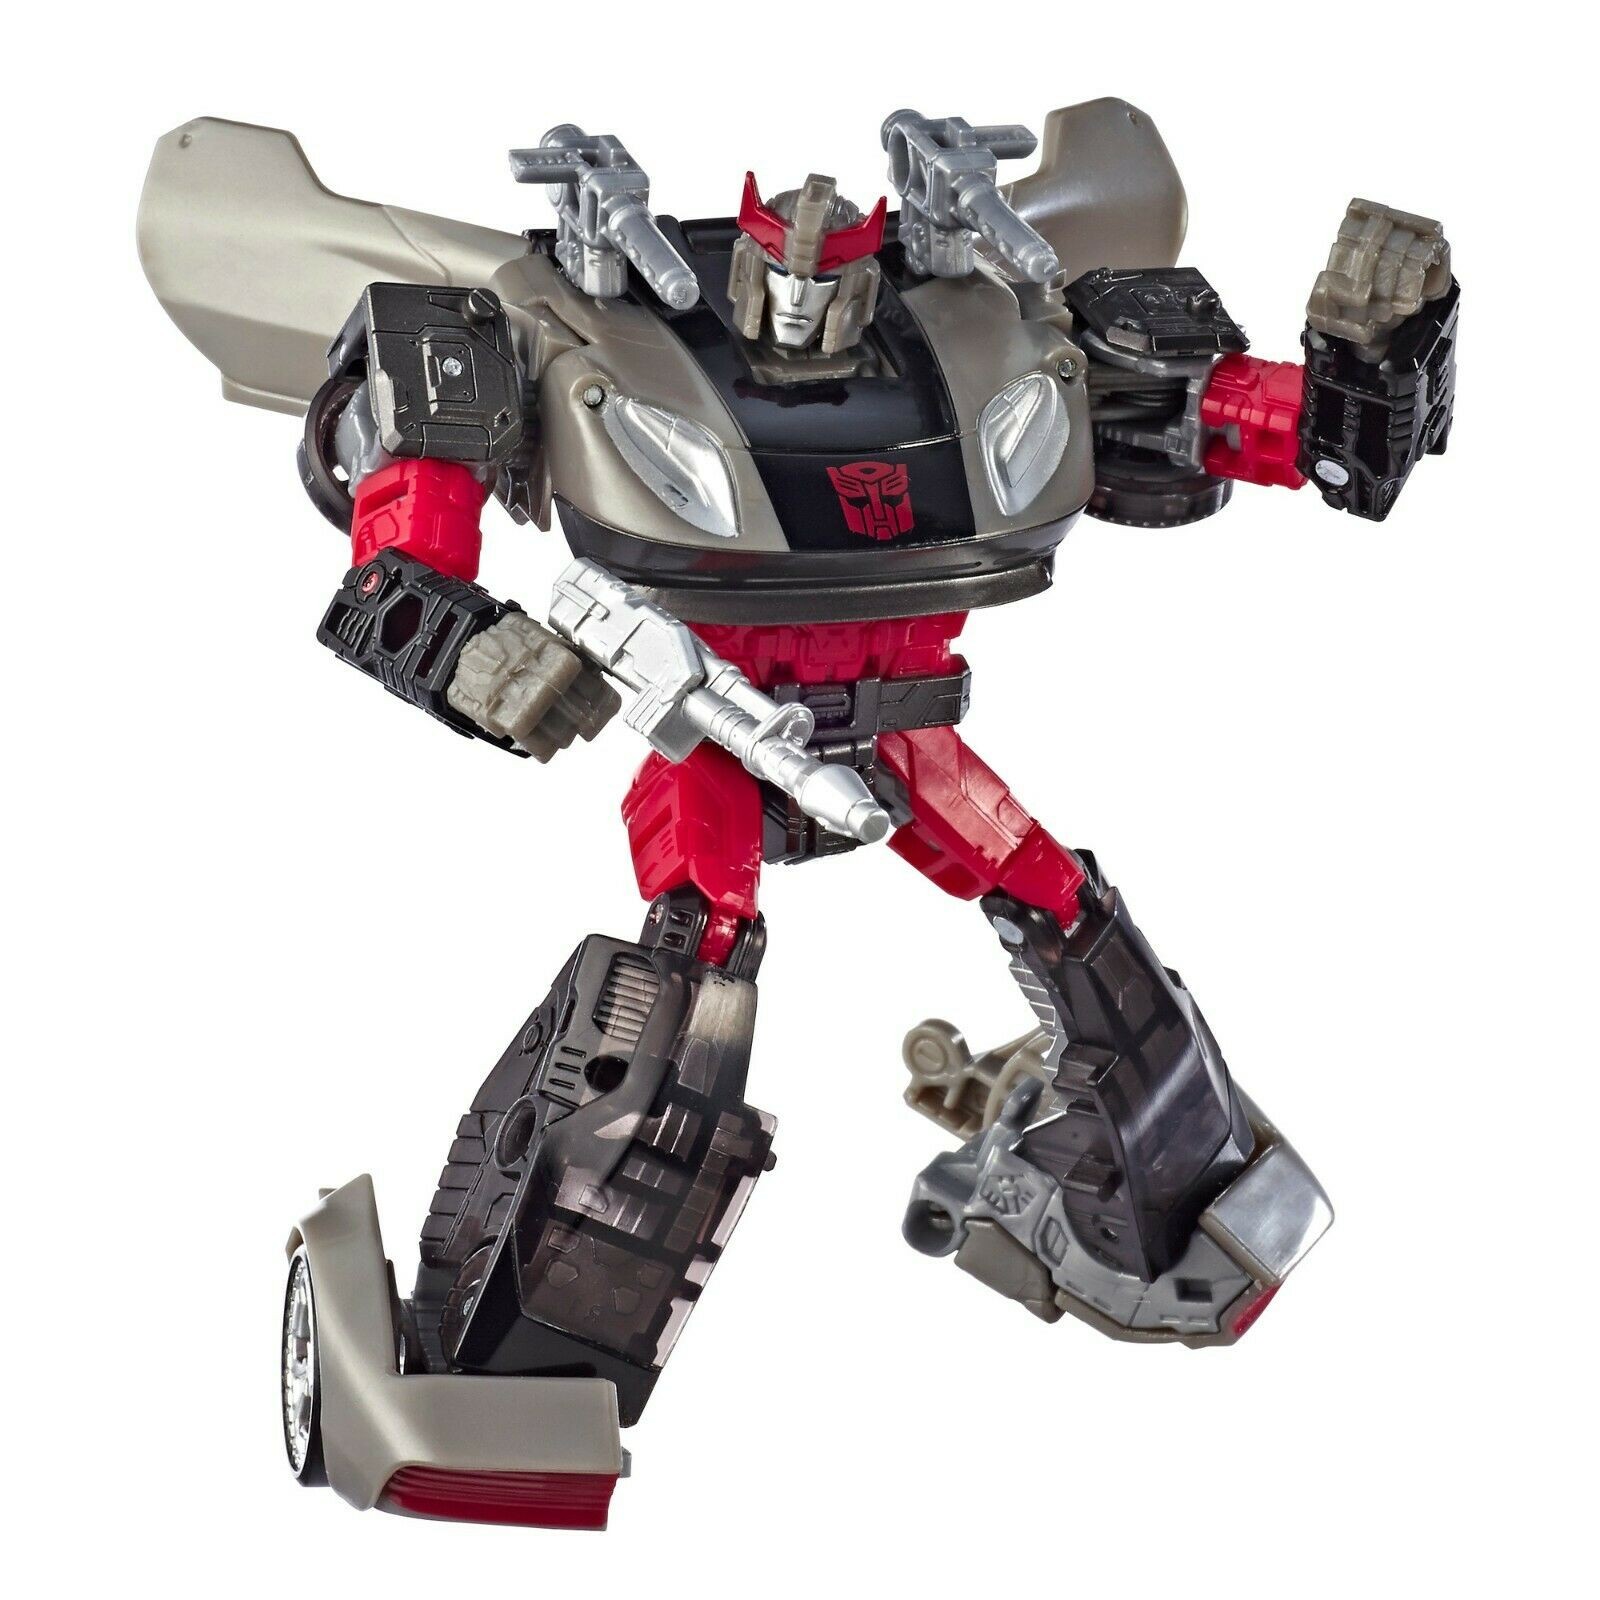 Transformers News: Exclusve Transformers WFC Siege Bluestreak Available Online at Walmart.ca